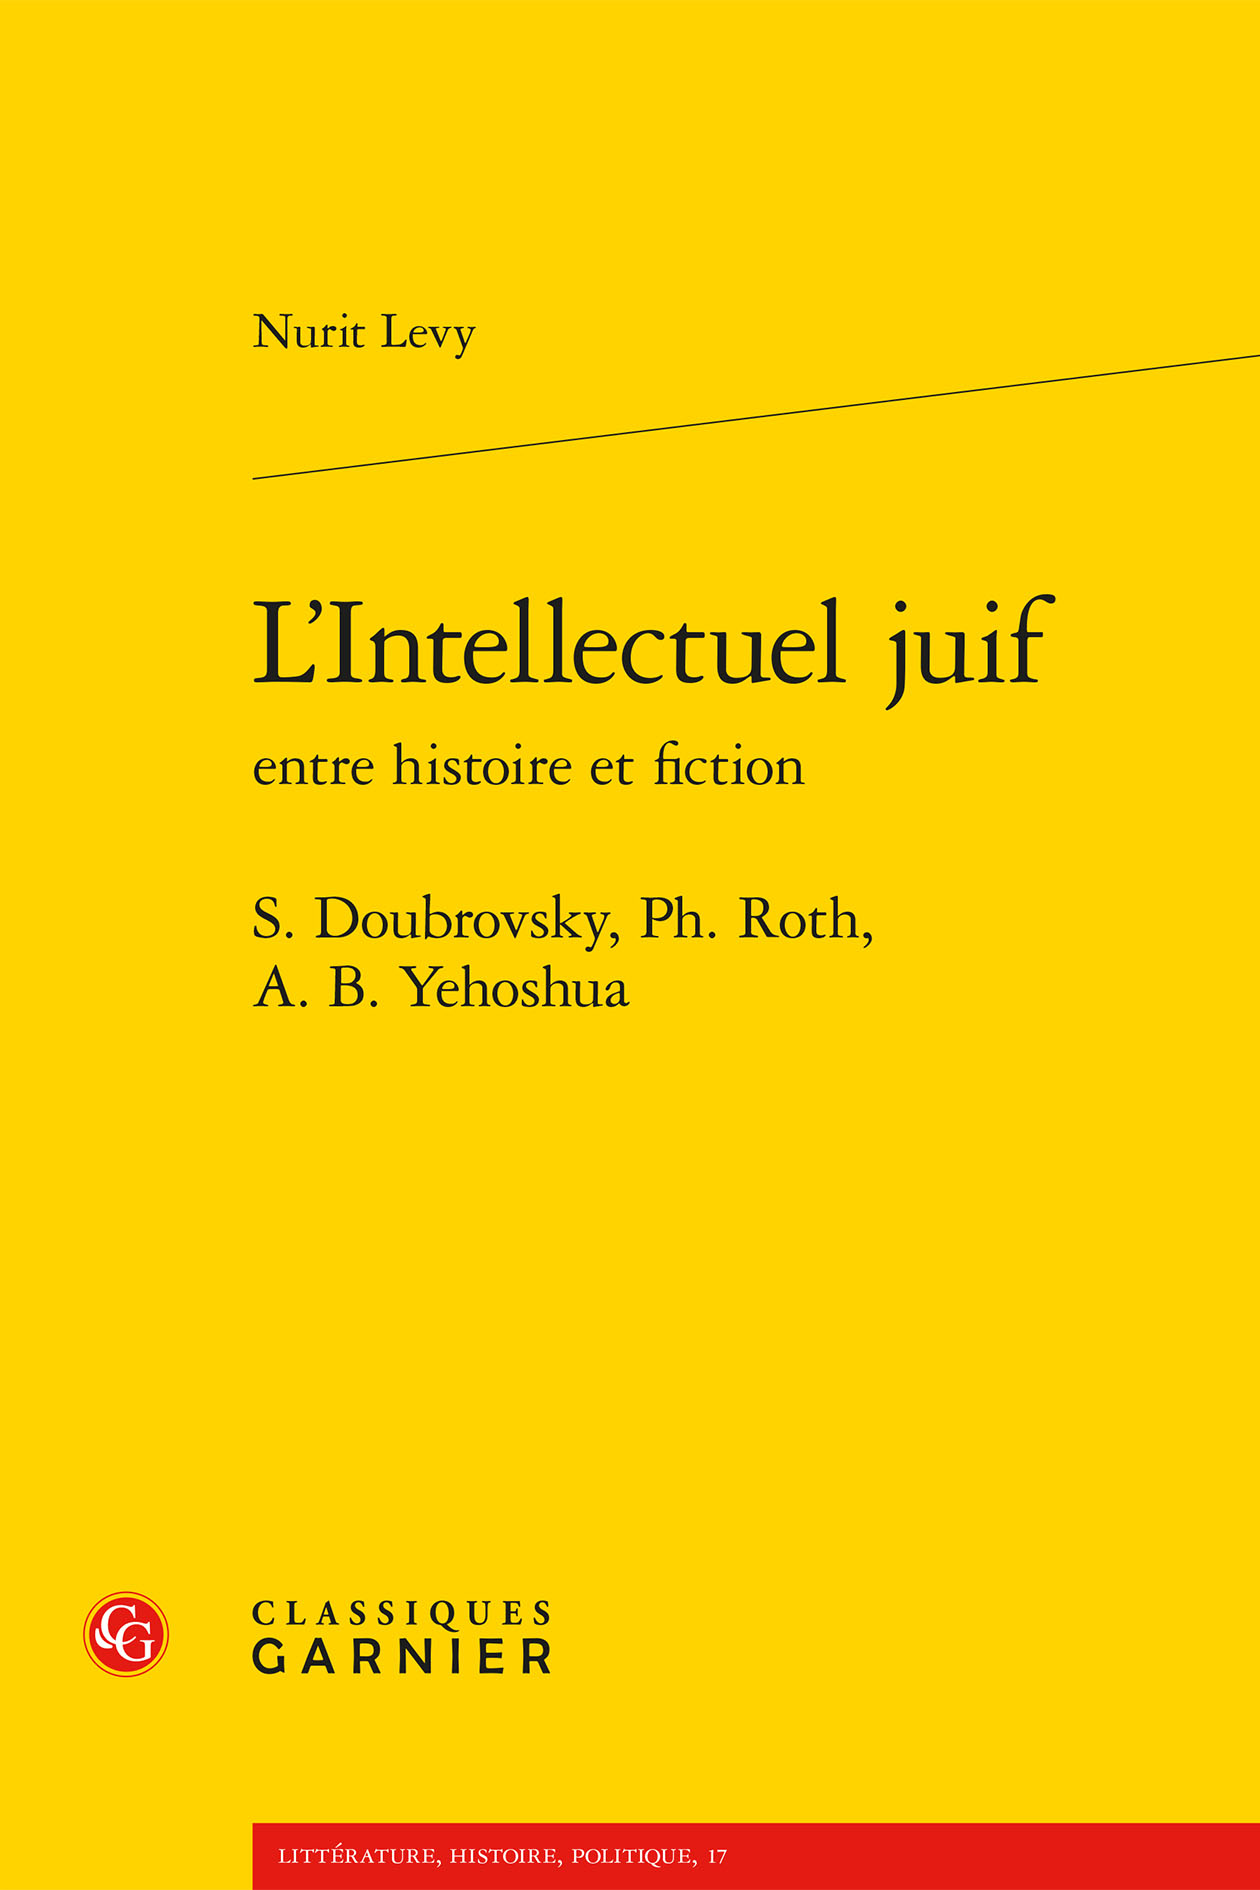 N. Levy, L'Intellectuel juif entre histoire et fiction. S. Doubrovsky, Ph. Roth, A. B. Yehoshua